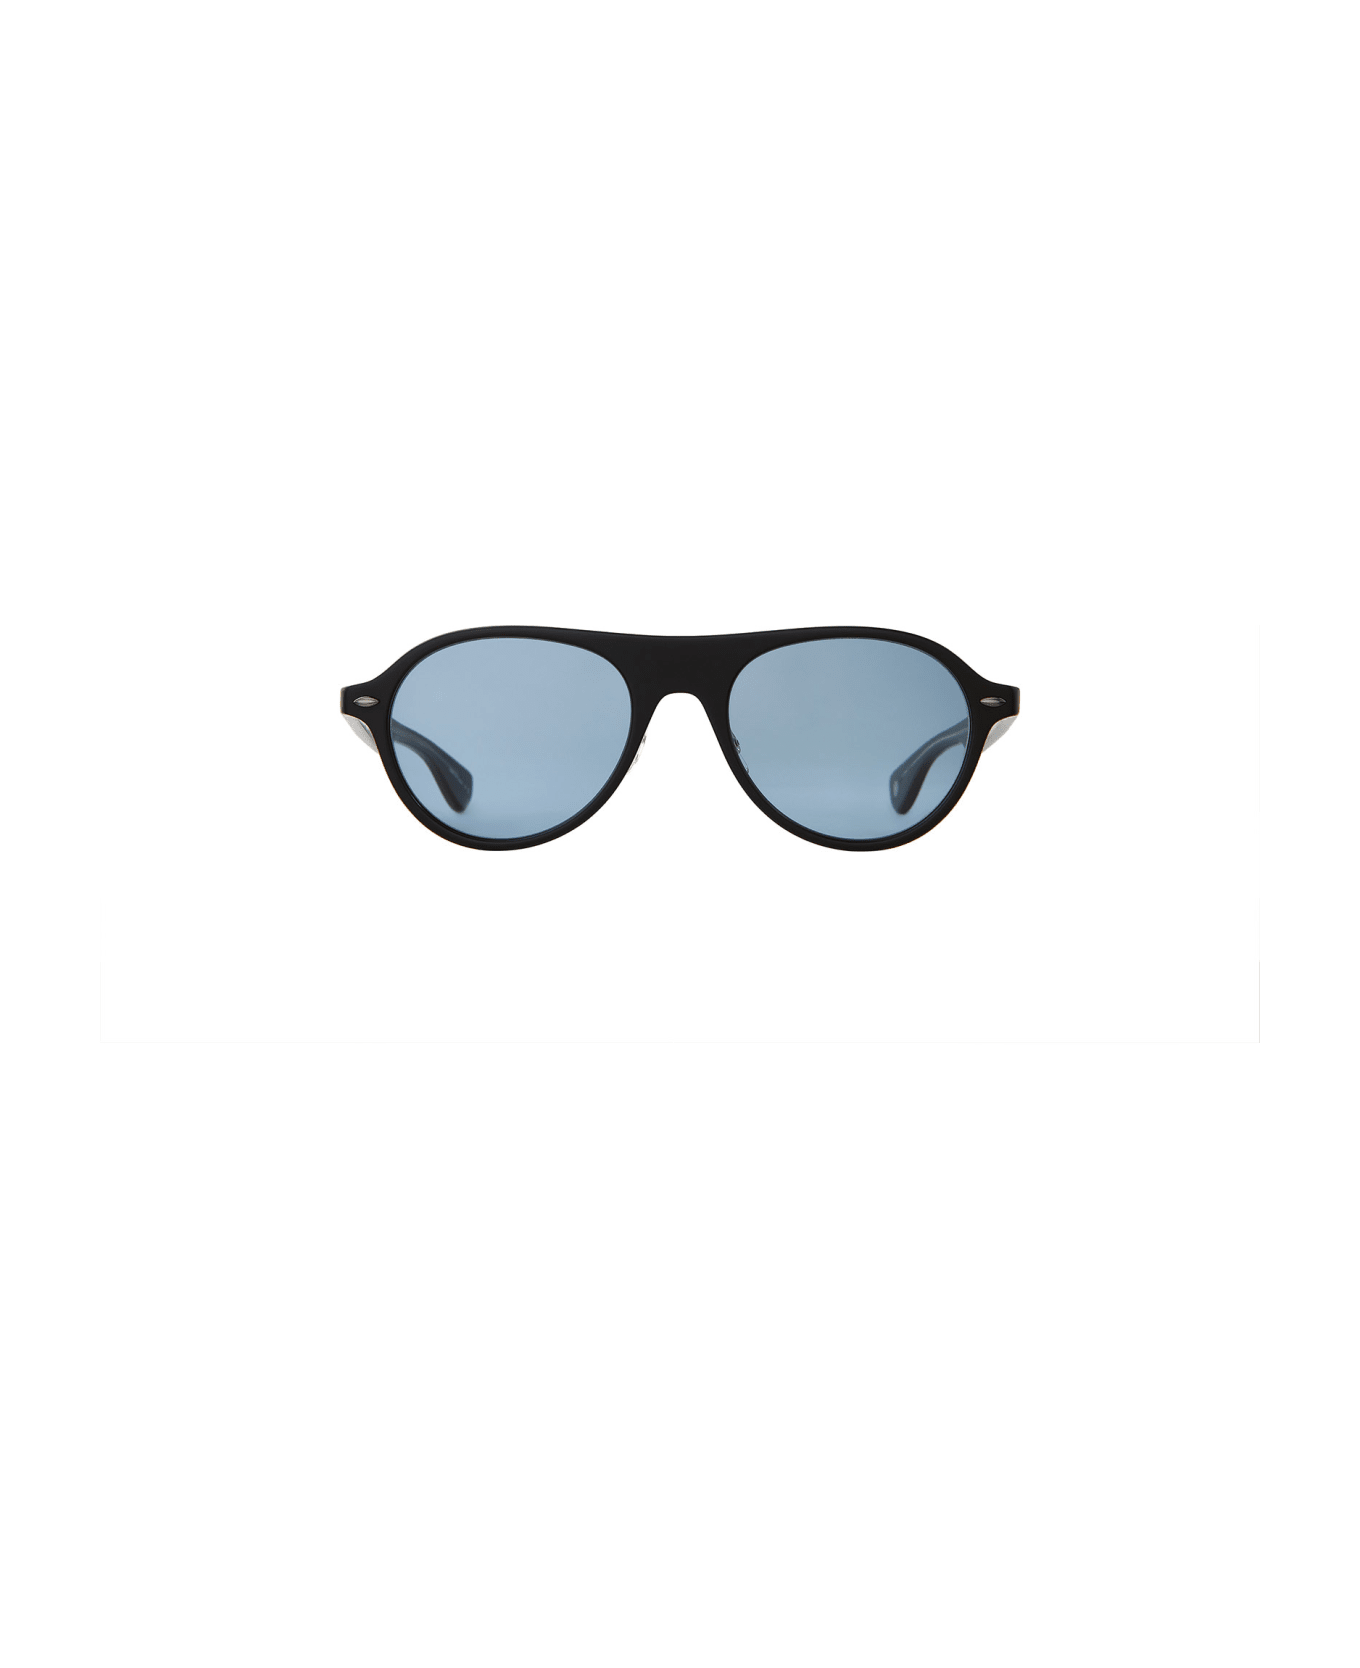 Garrett Leight Lady Eckhart Sun Matte Black Sunglasses - Matte Black サングラス